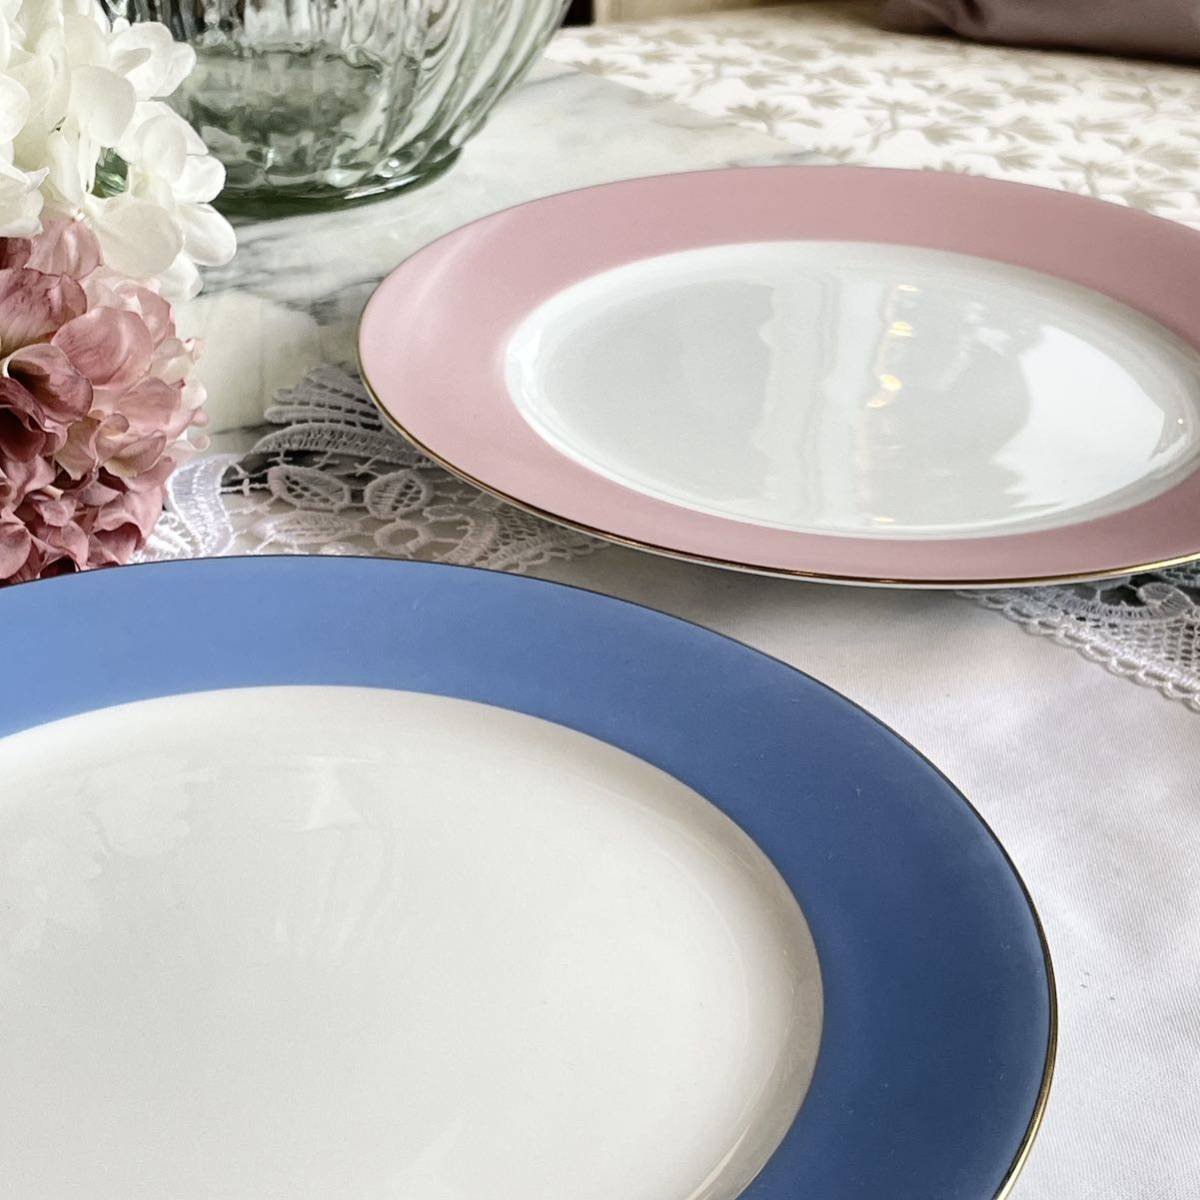 r164 大倉陶園 シンプルながら上品な雰囲気を醸し出す 色蒔き ピンク ブルー デザートプレート 2枚 鮮やかな色彩と白磁の対比が美しい_画像4